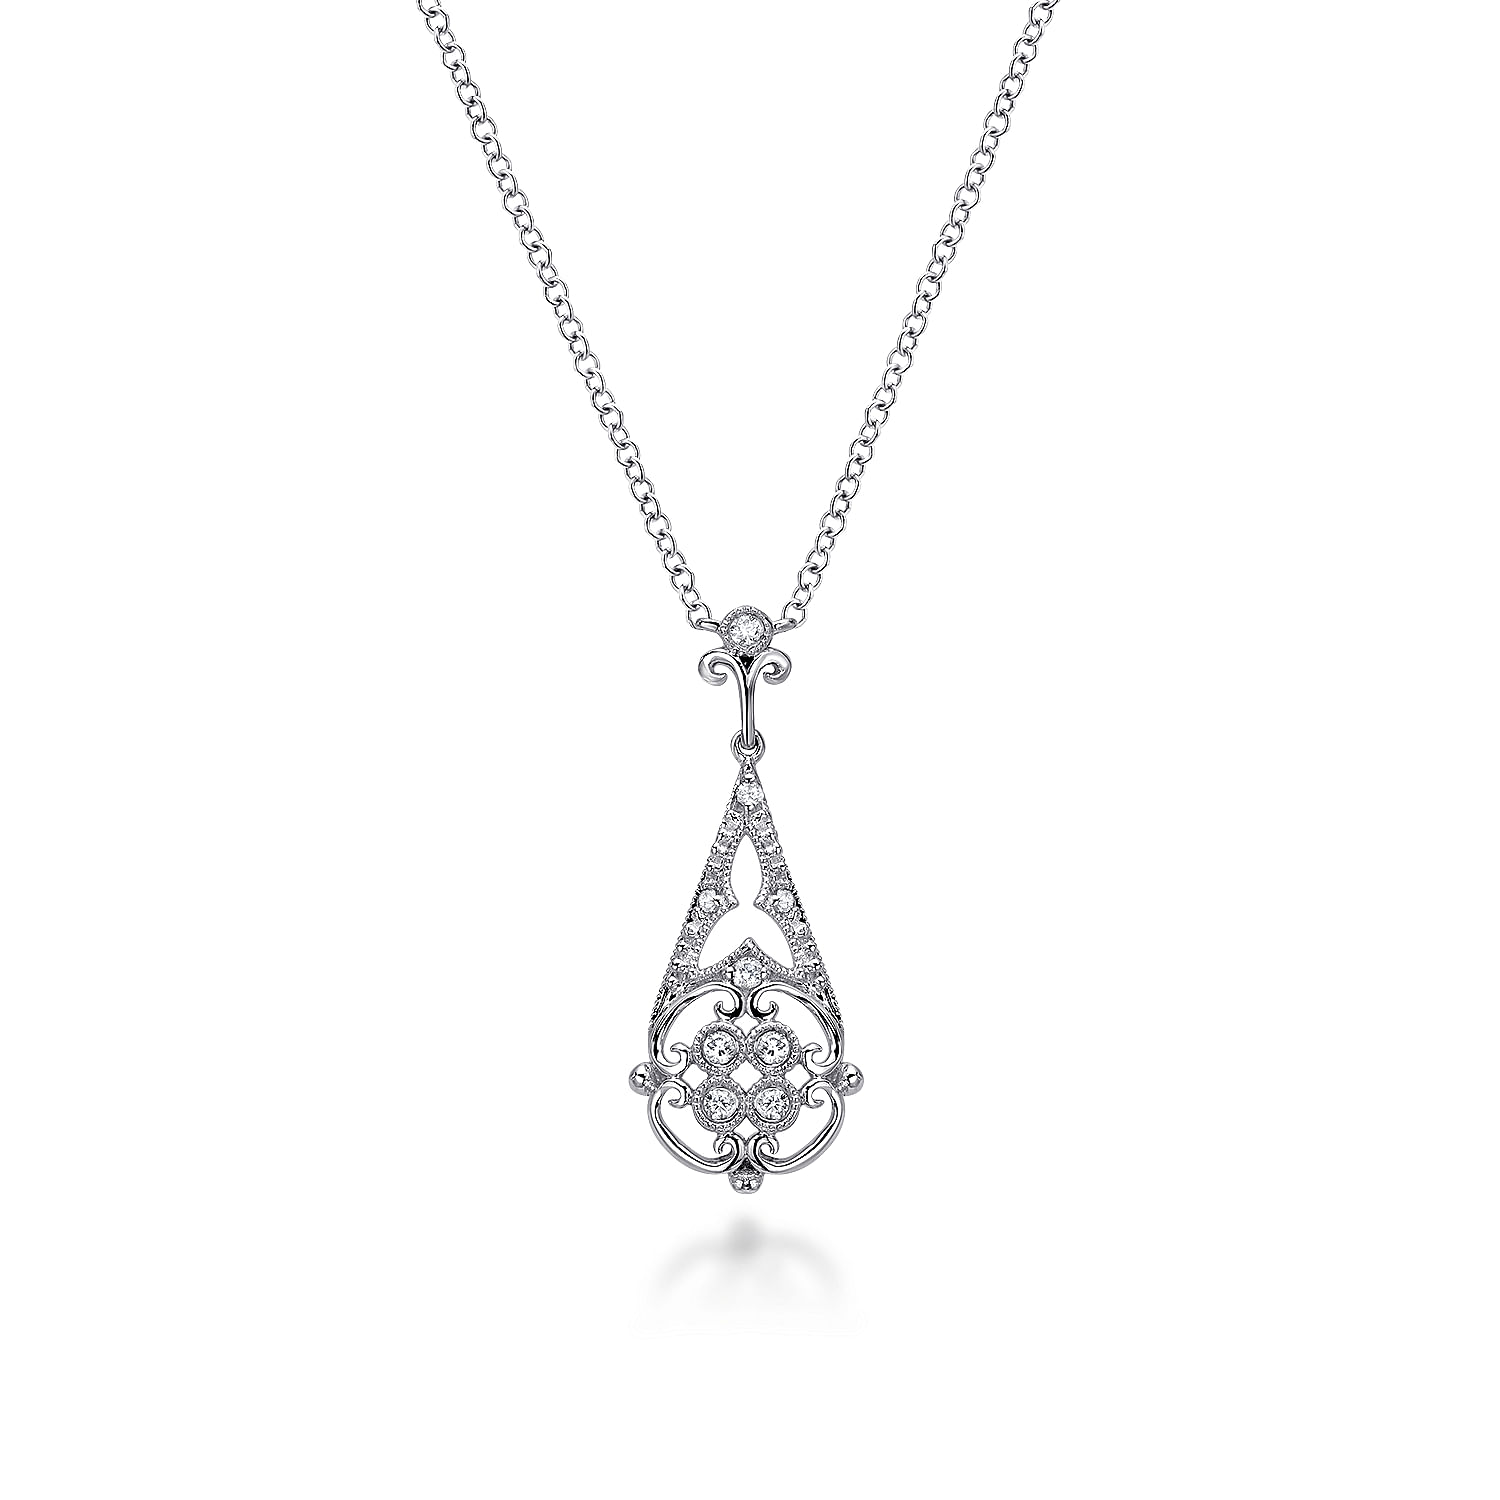 Vintage Inspired 14K White Gold Diamond Teardrop Pendant Necklace